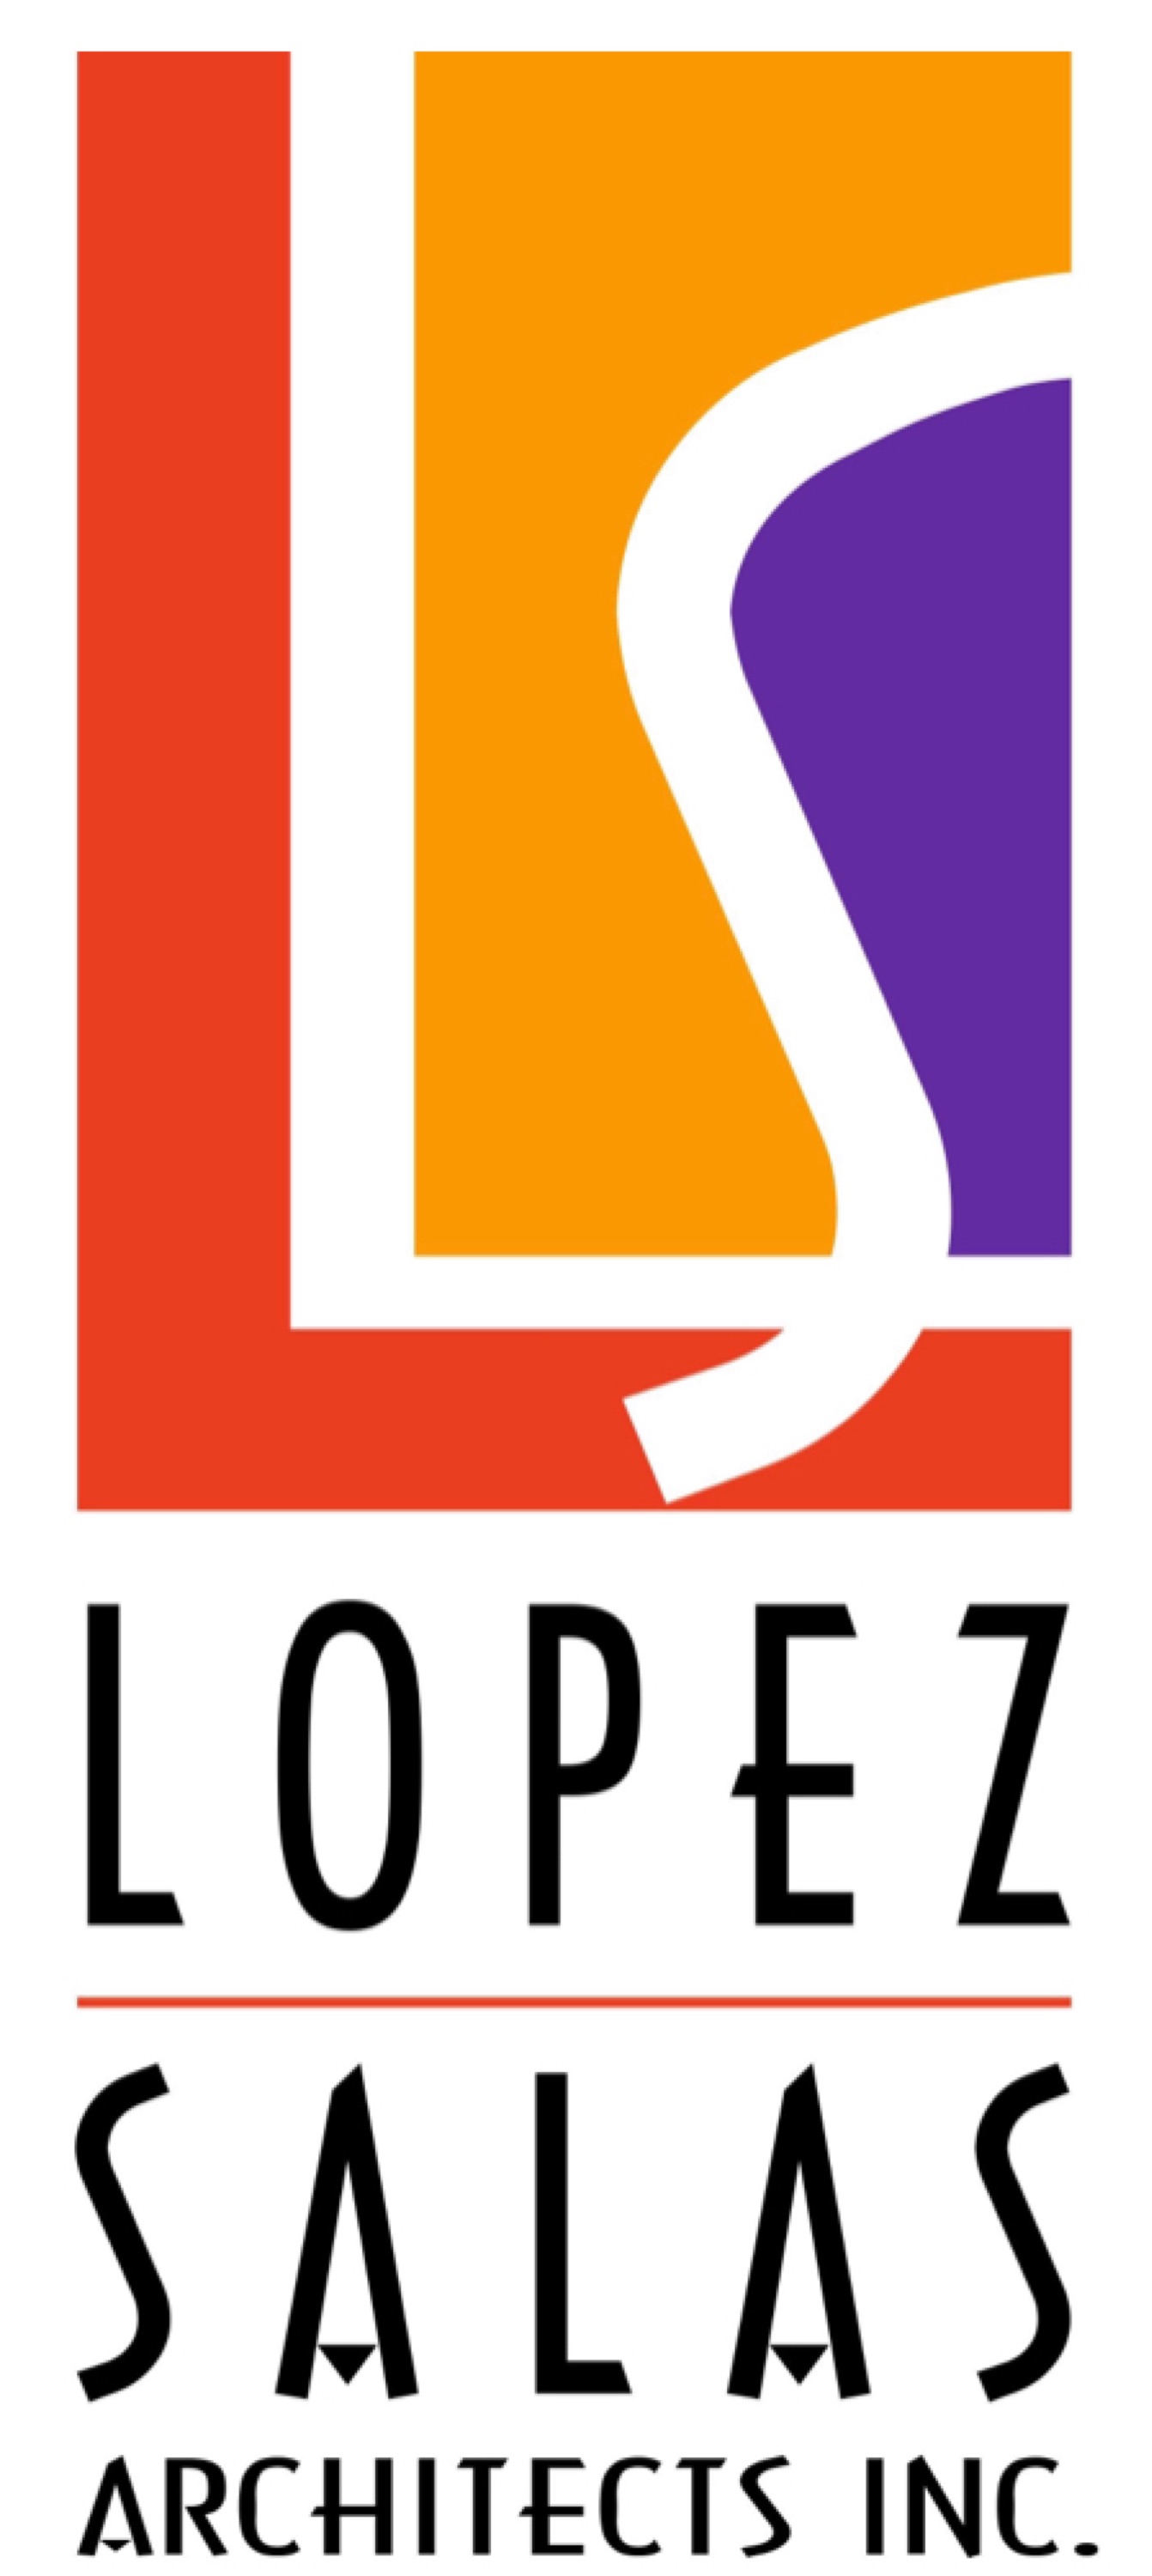 Lopez Salas Architects, Inc. Logo